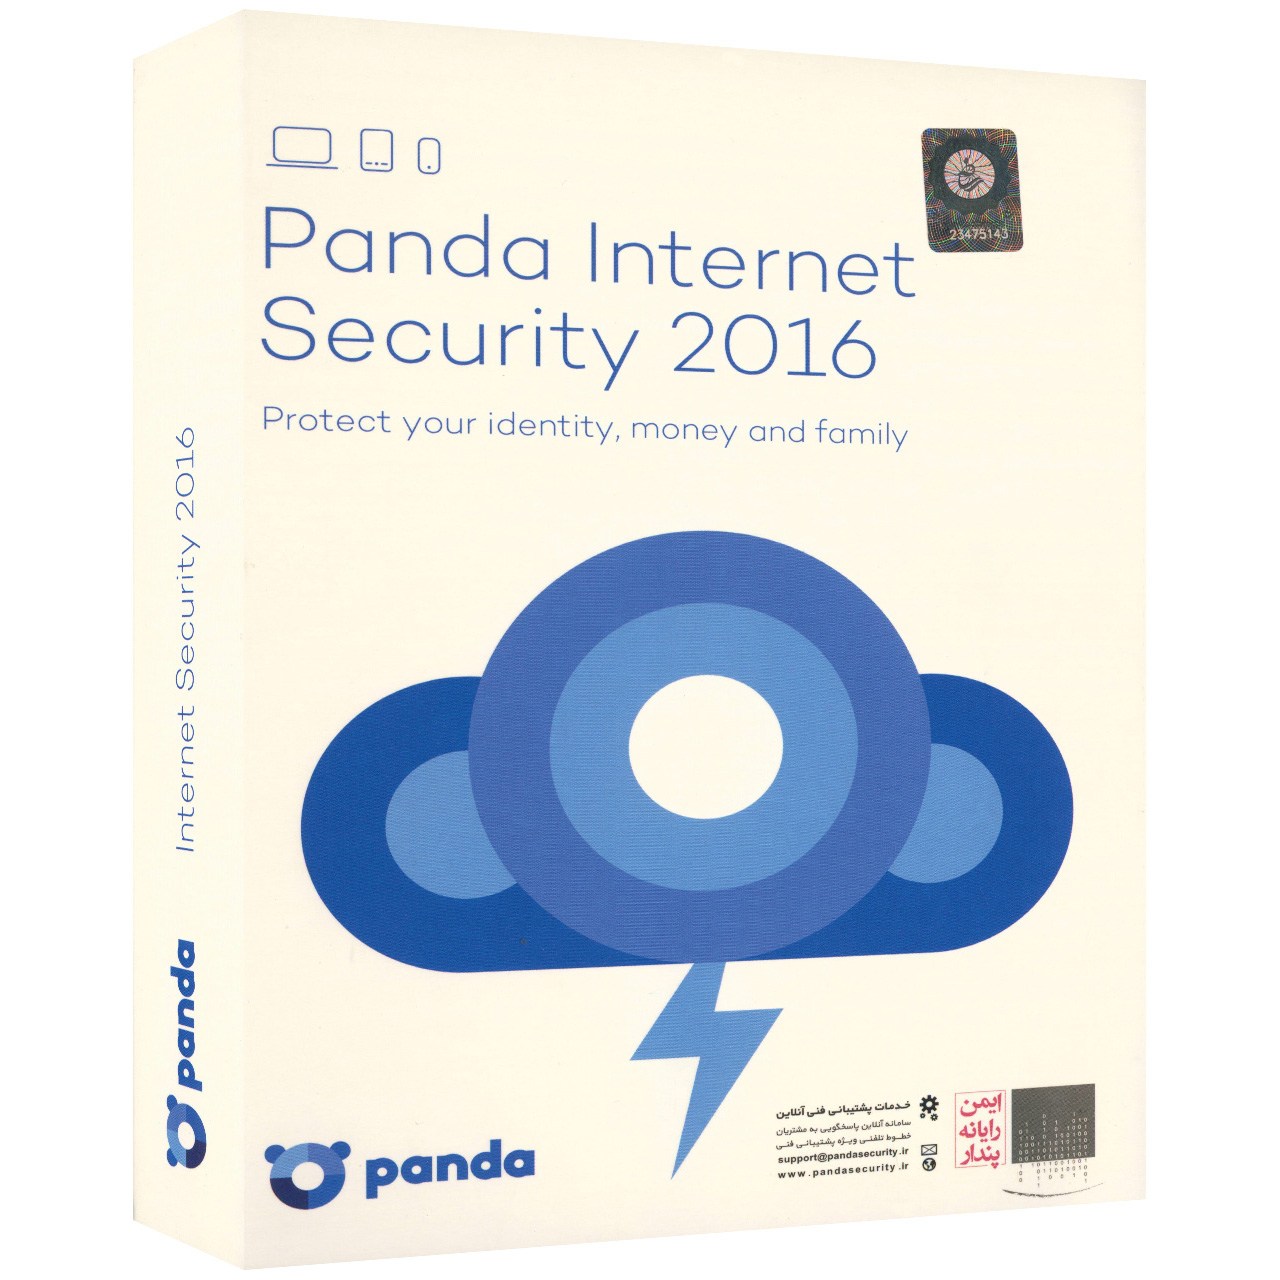 اینترنت سکیوریتی پاندا 2016